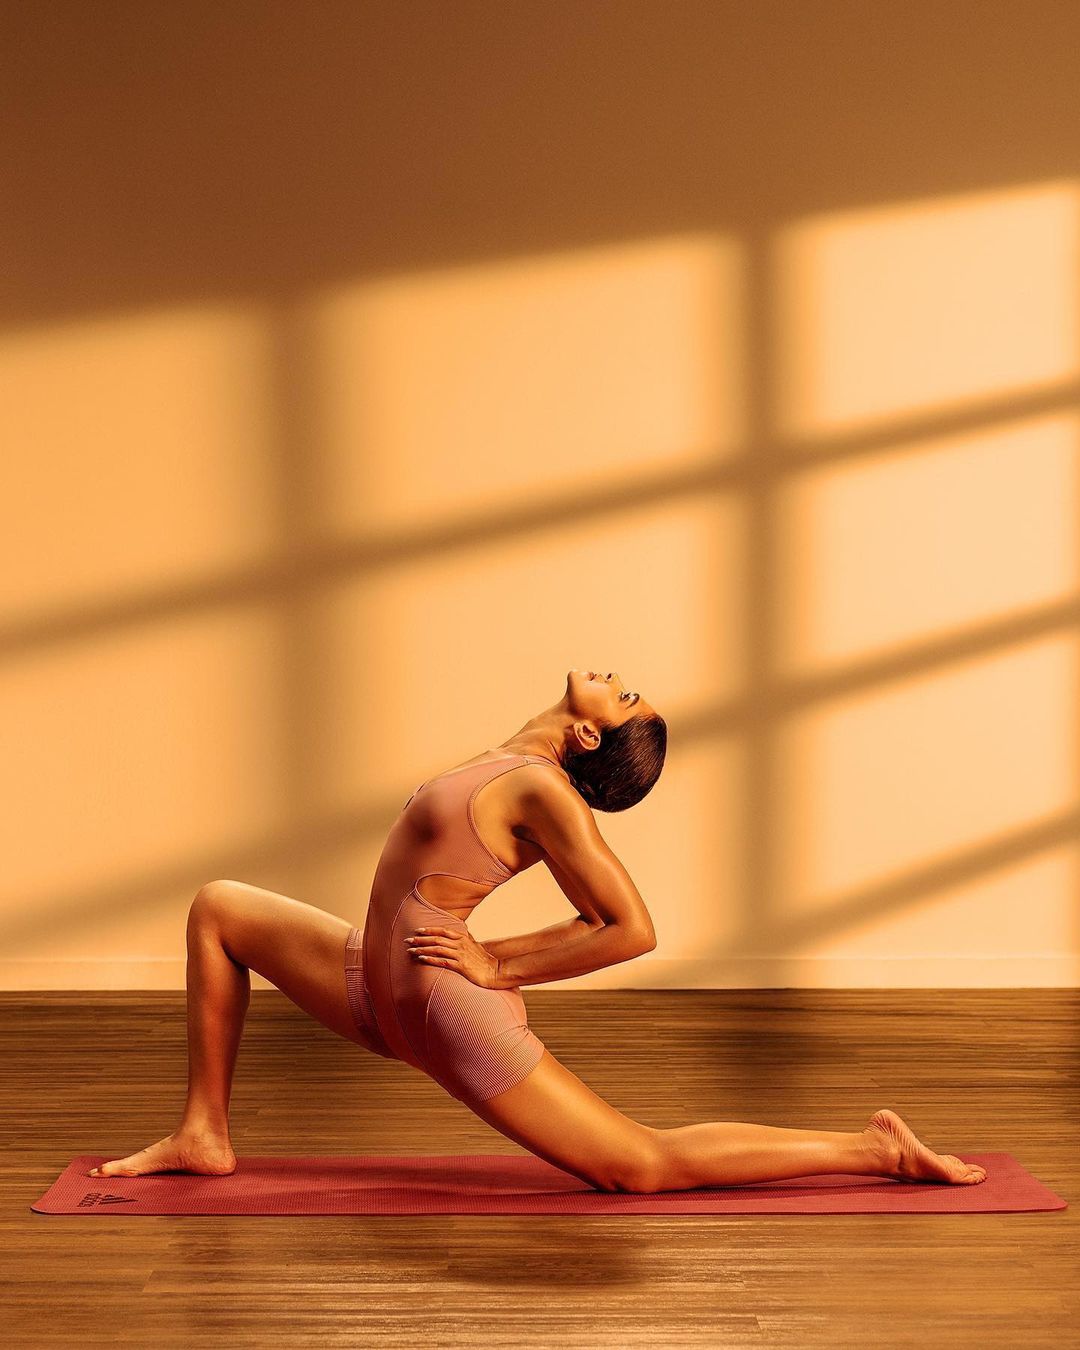 deepika padukon yoga pose (3)